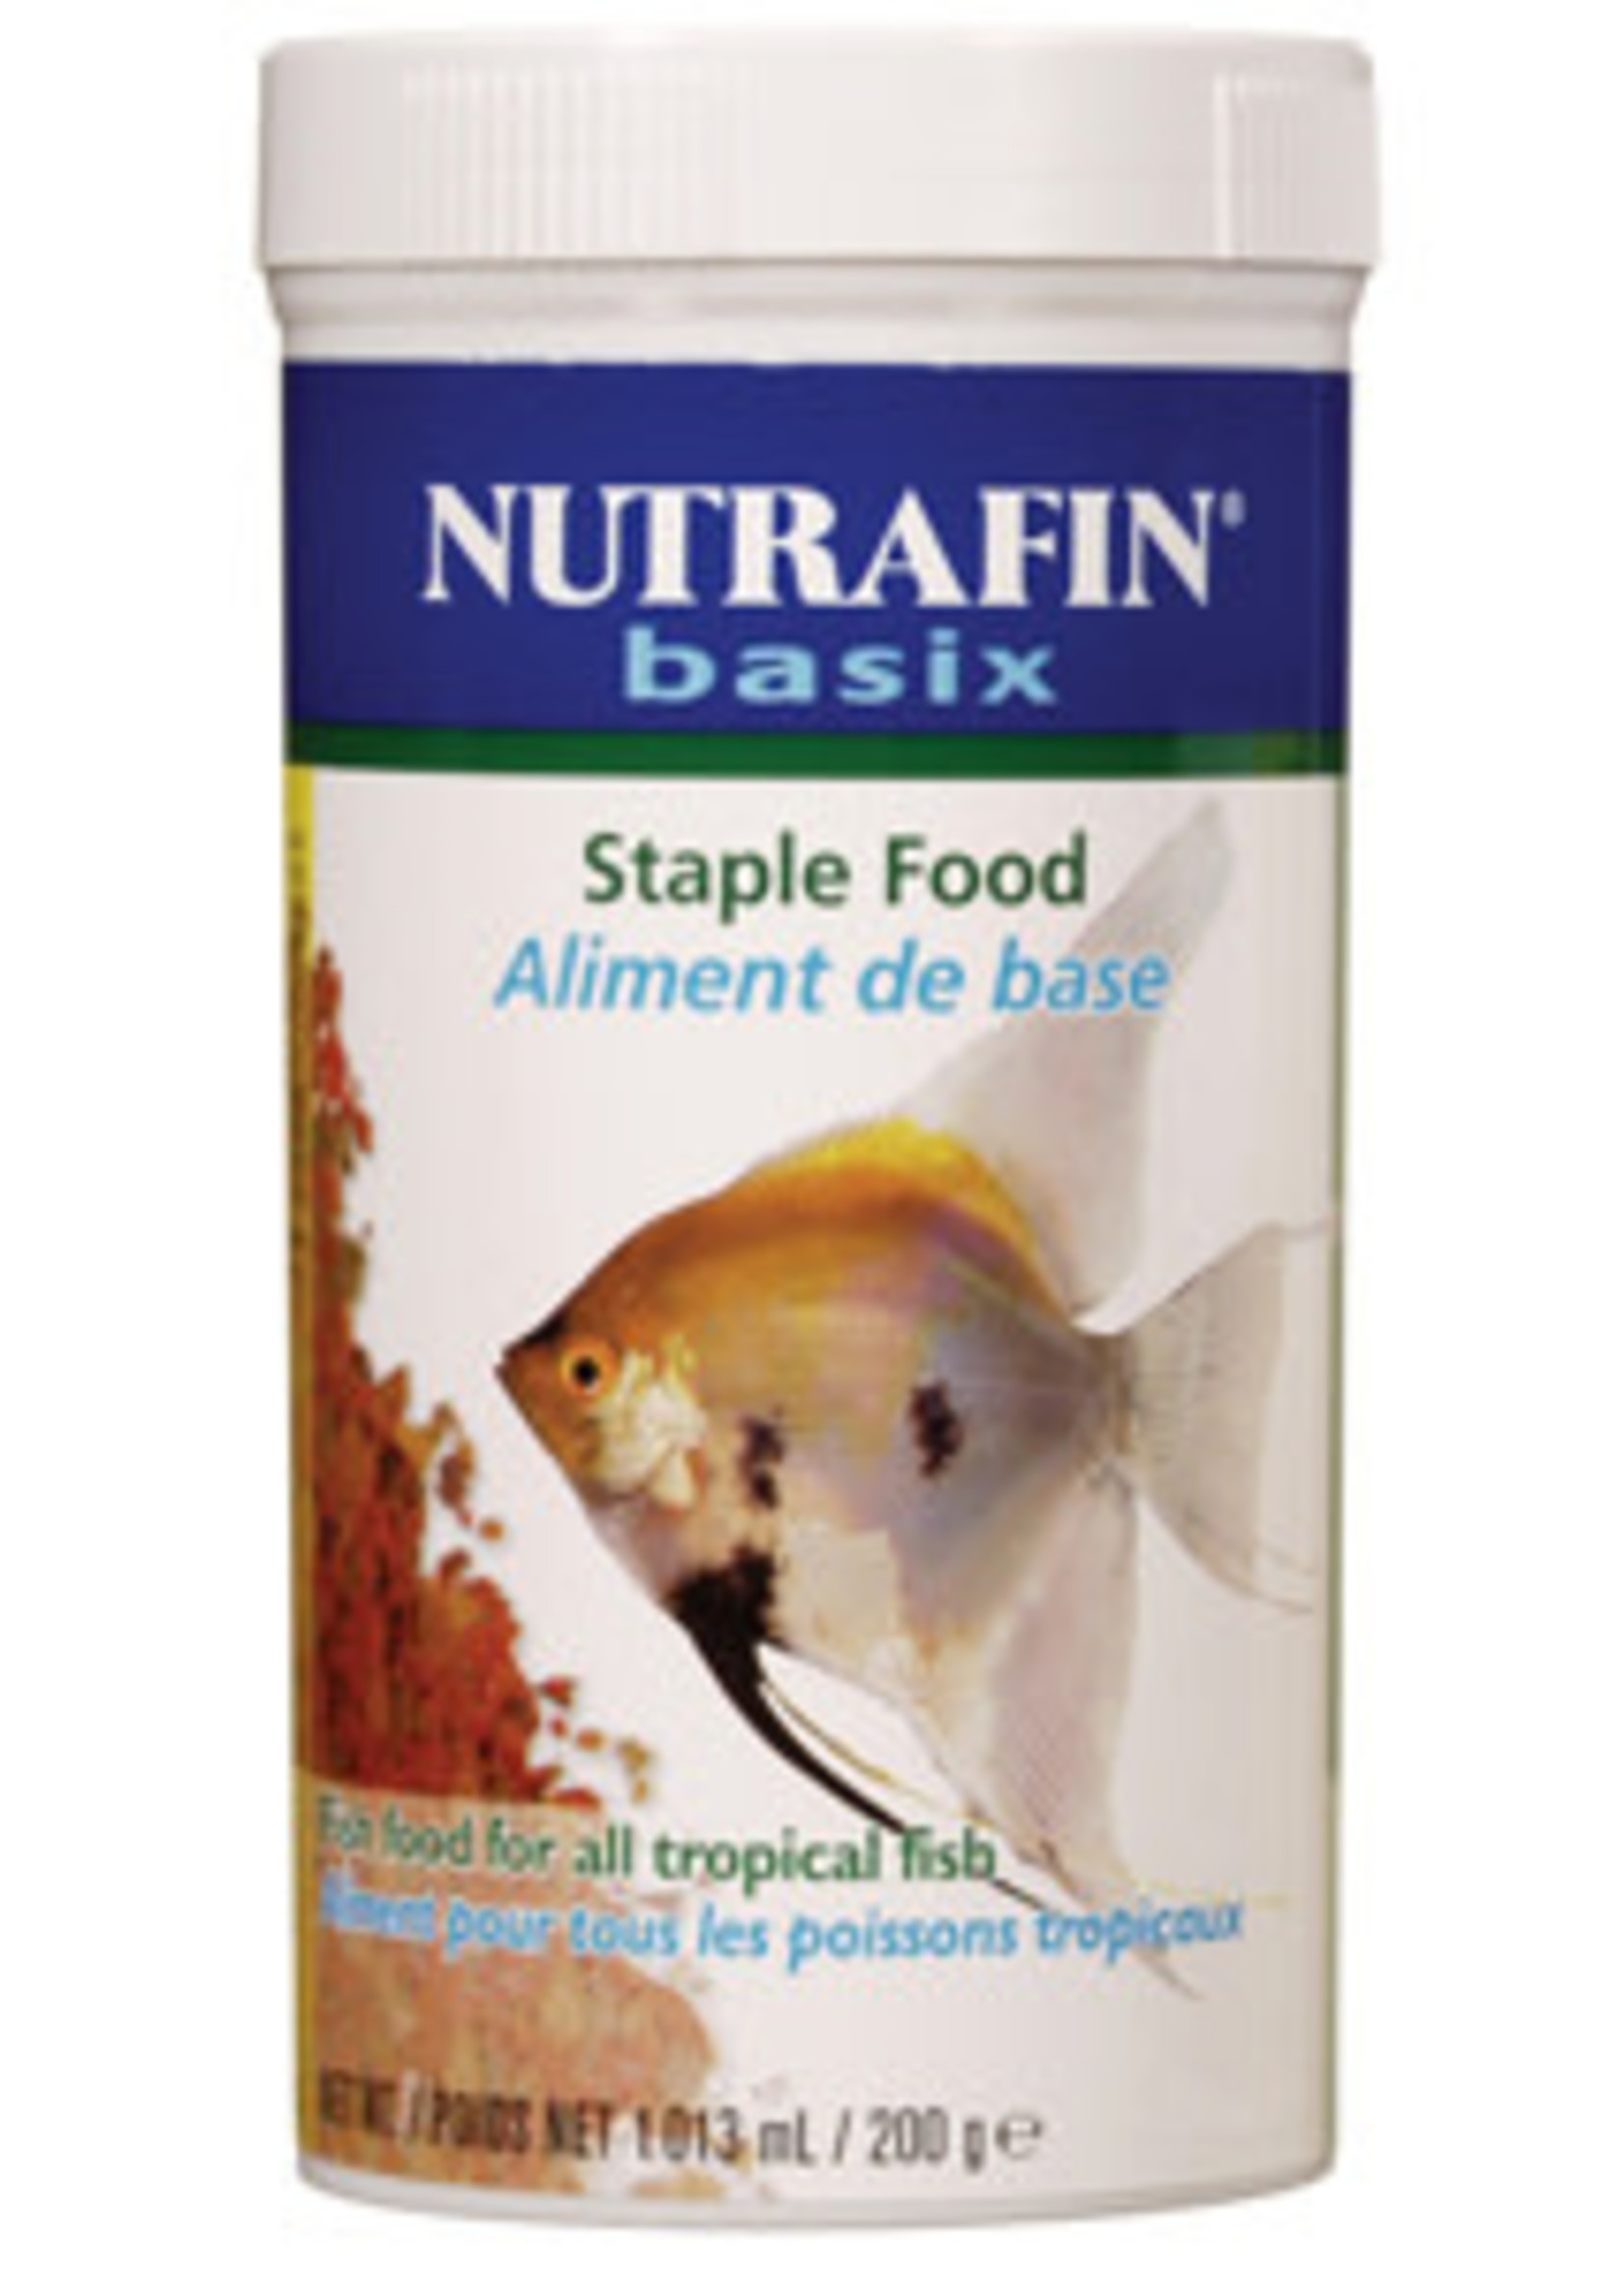 Nutrafin Nutrafin Basix Staple Food, 200 g (7 oz)